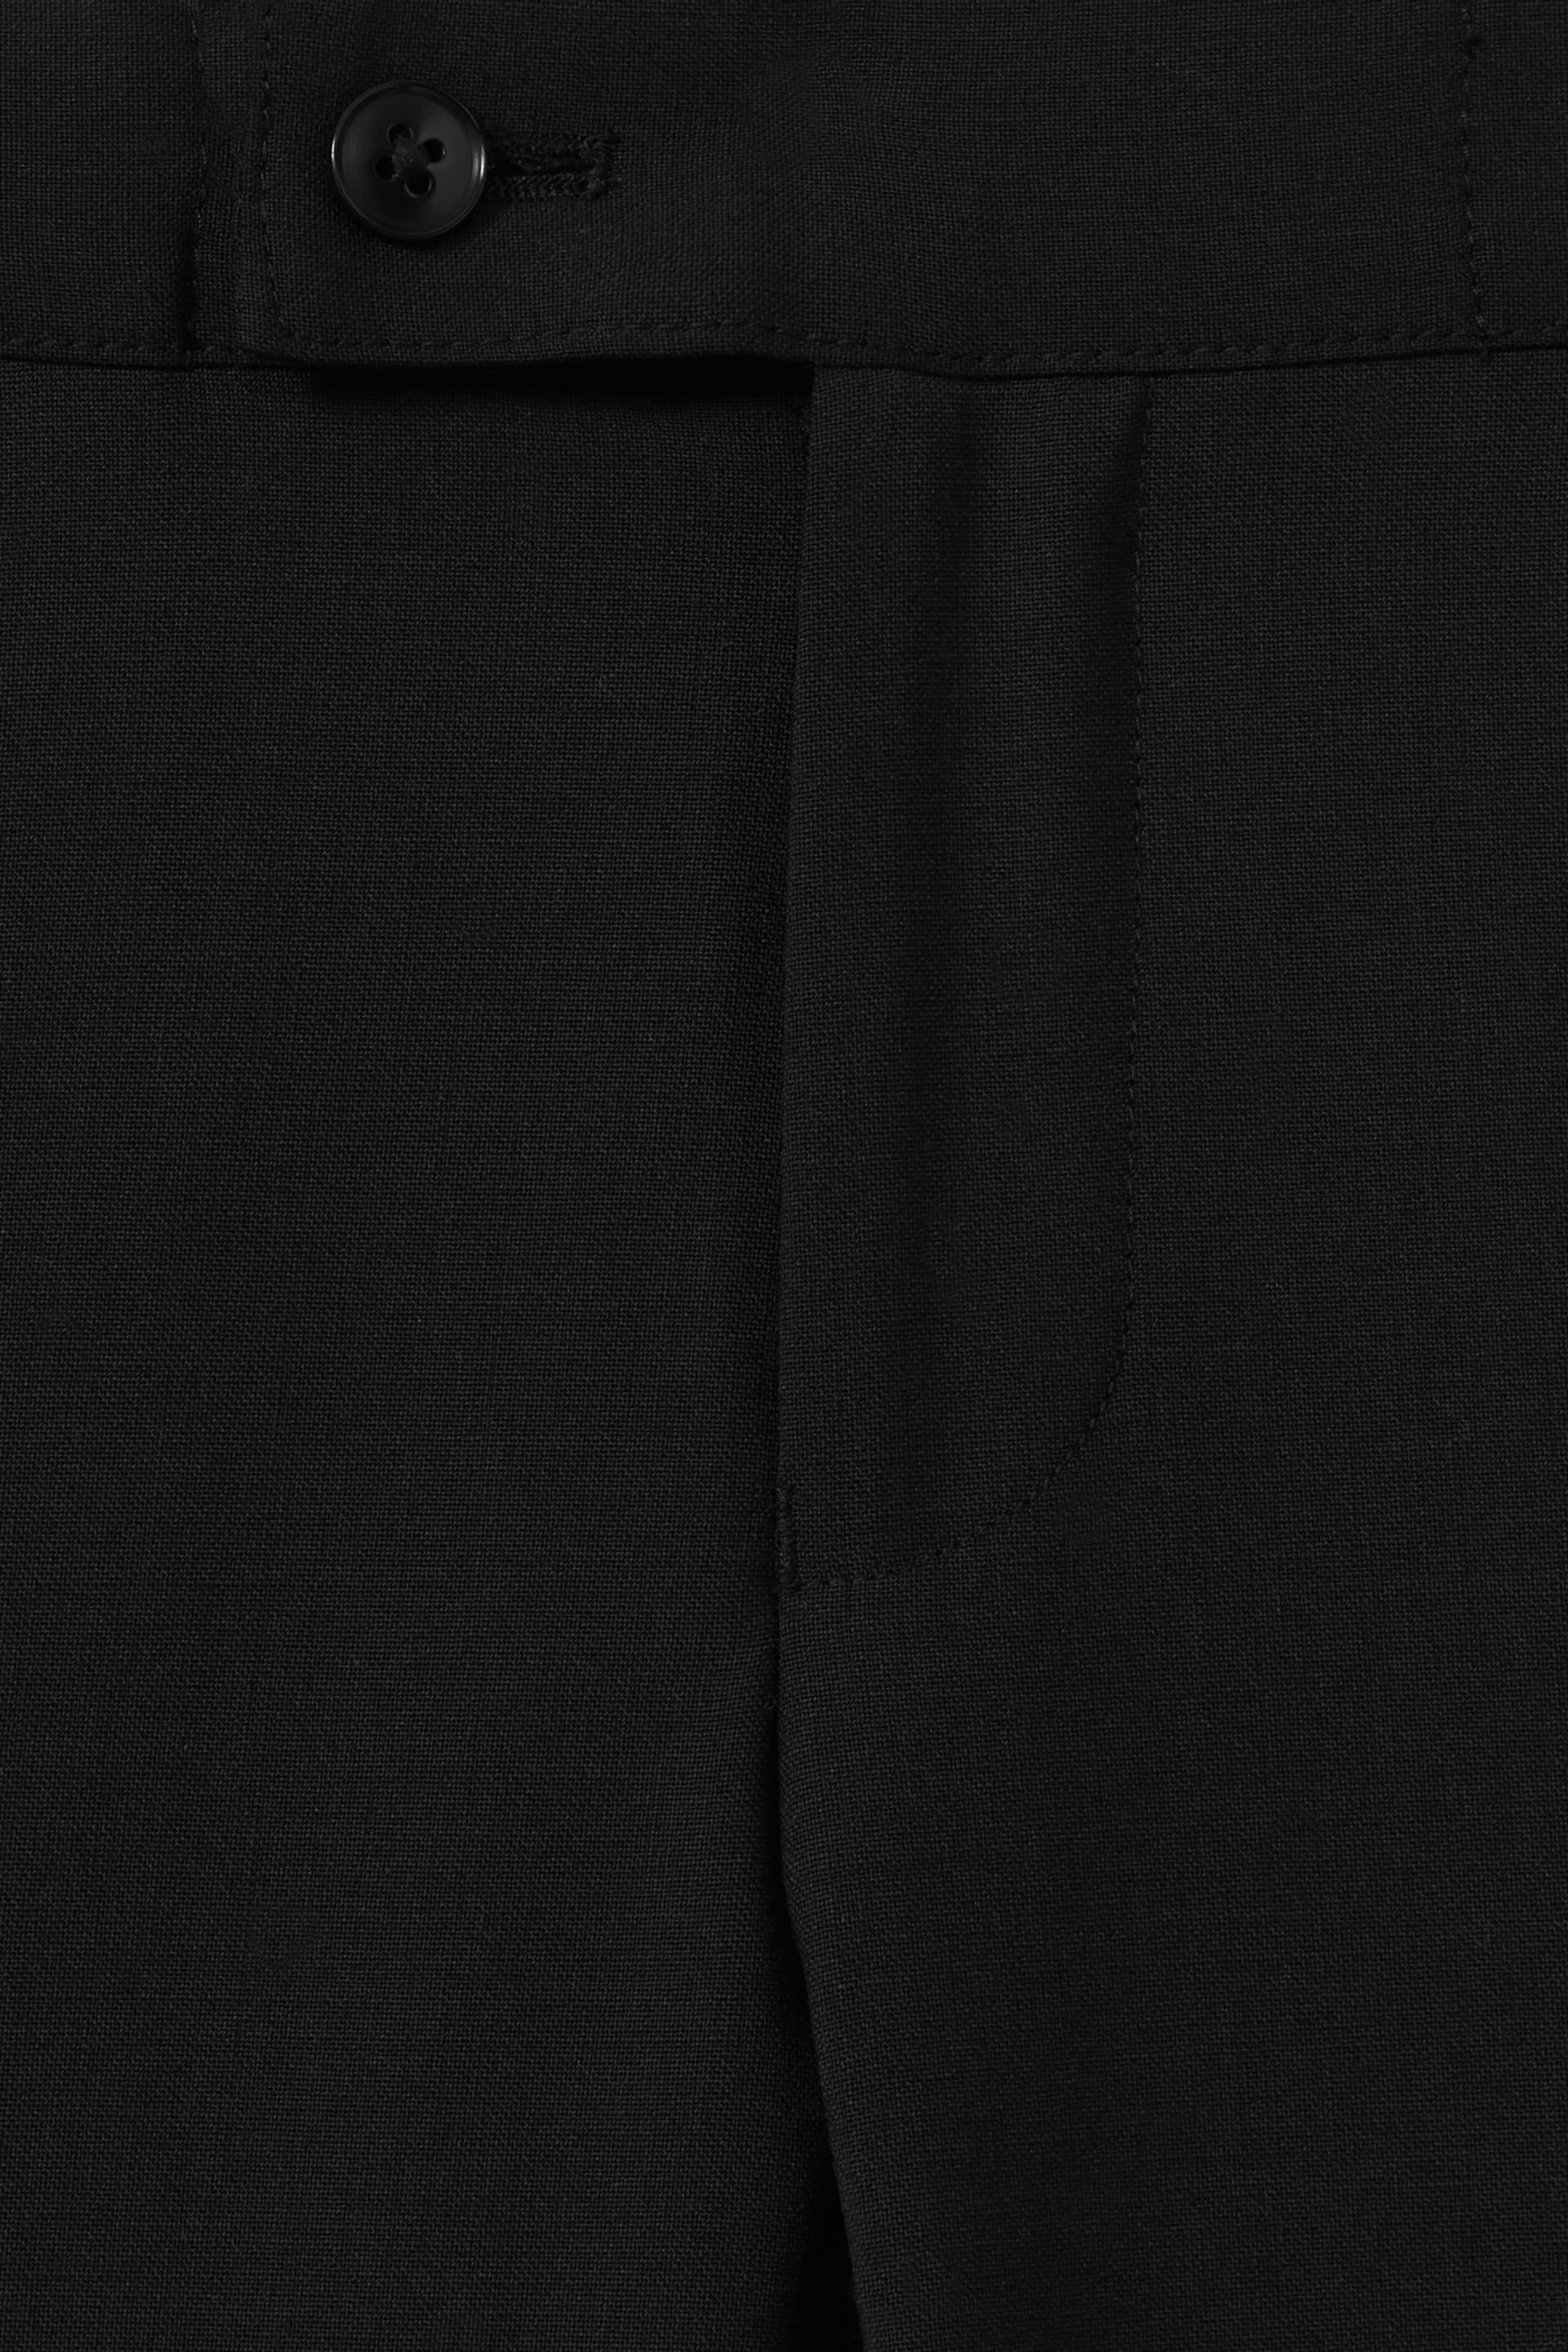 Reiss Black Knightsbridge T Tuxedo Satin Stripe Trousers - Image 4 of 4